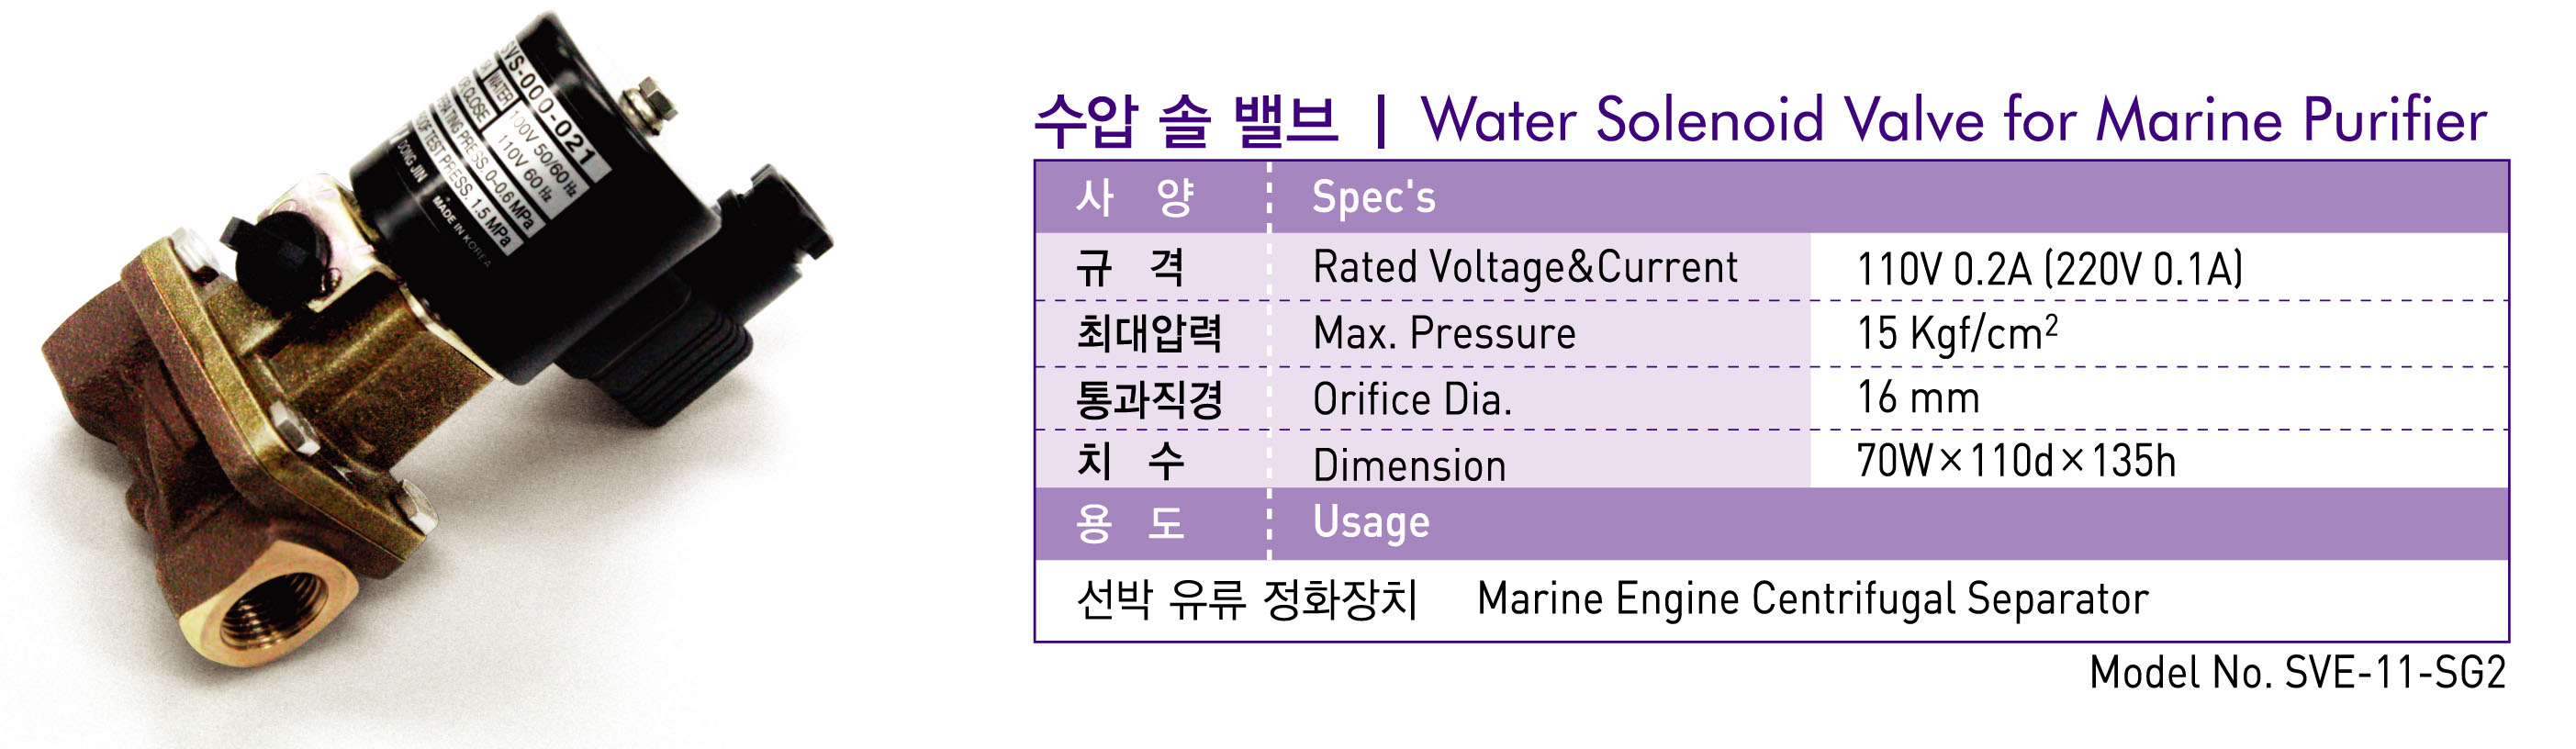 Water Solenoid Valve for Marine Purifier